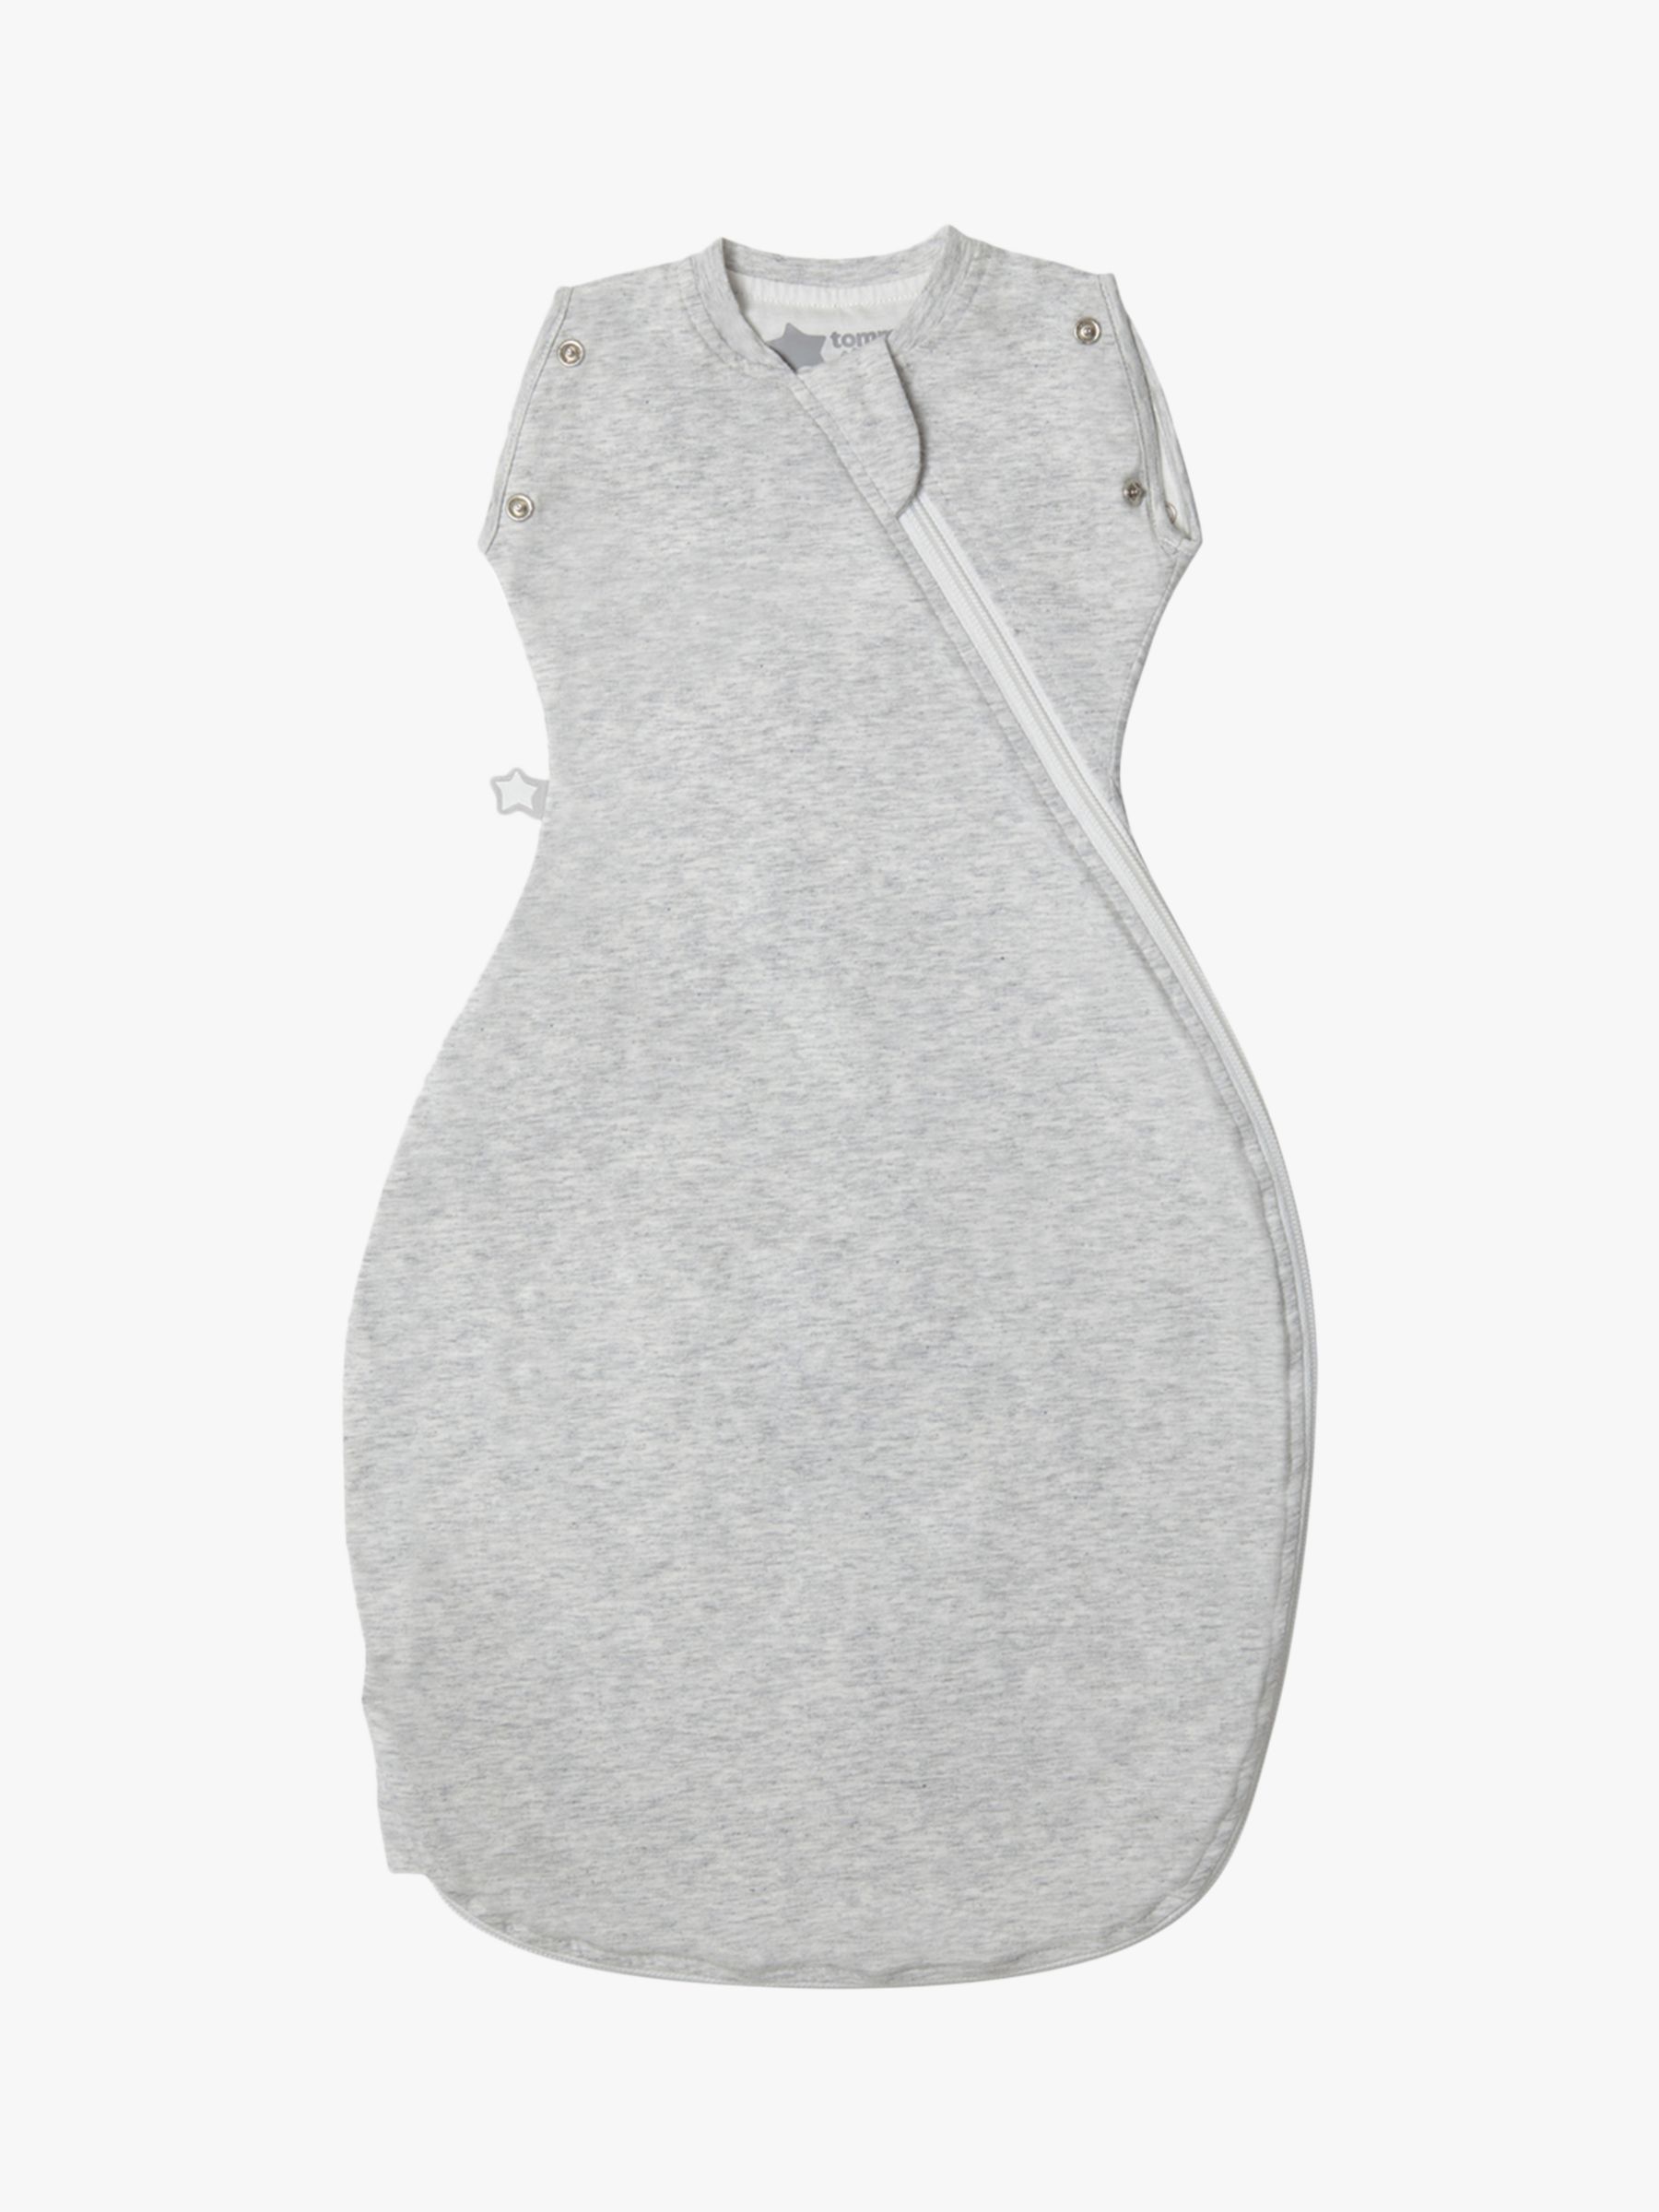 Tommee Tippee The Original Grobag Newborn Snuggle Baby Sleeping Bag, 0.2 Tog, Grey, 0-4 months